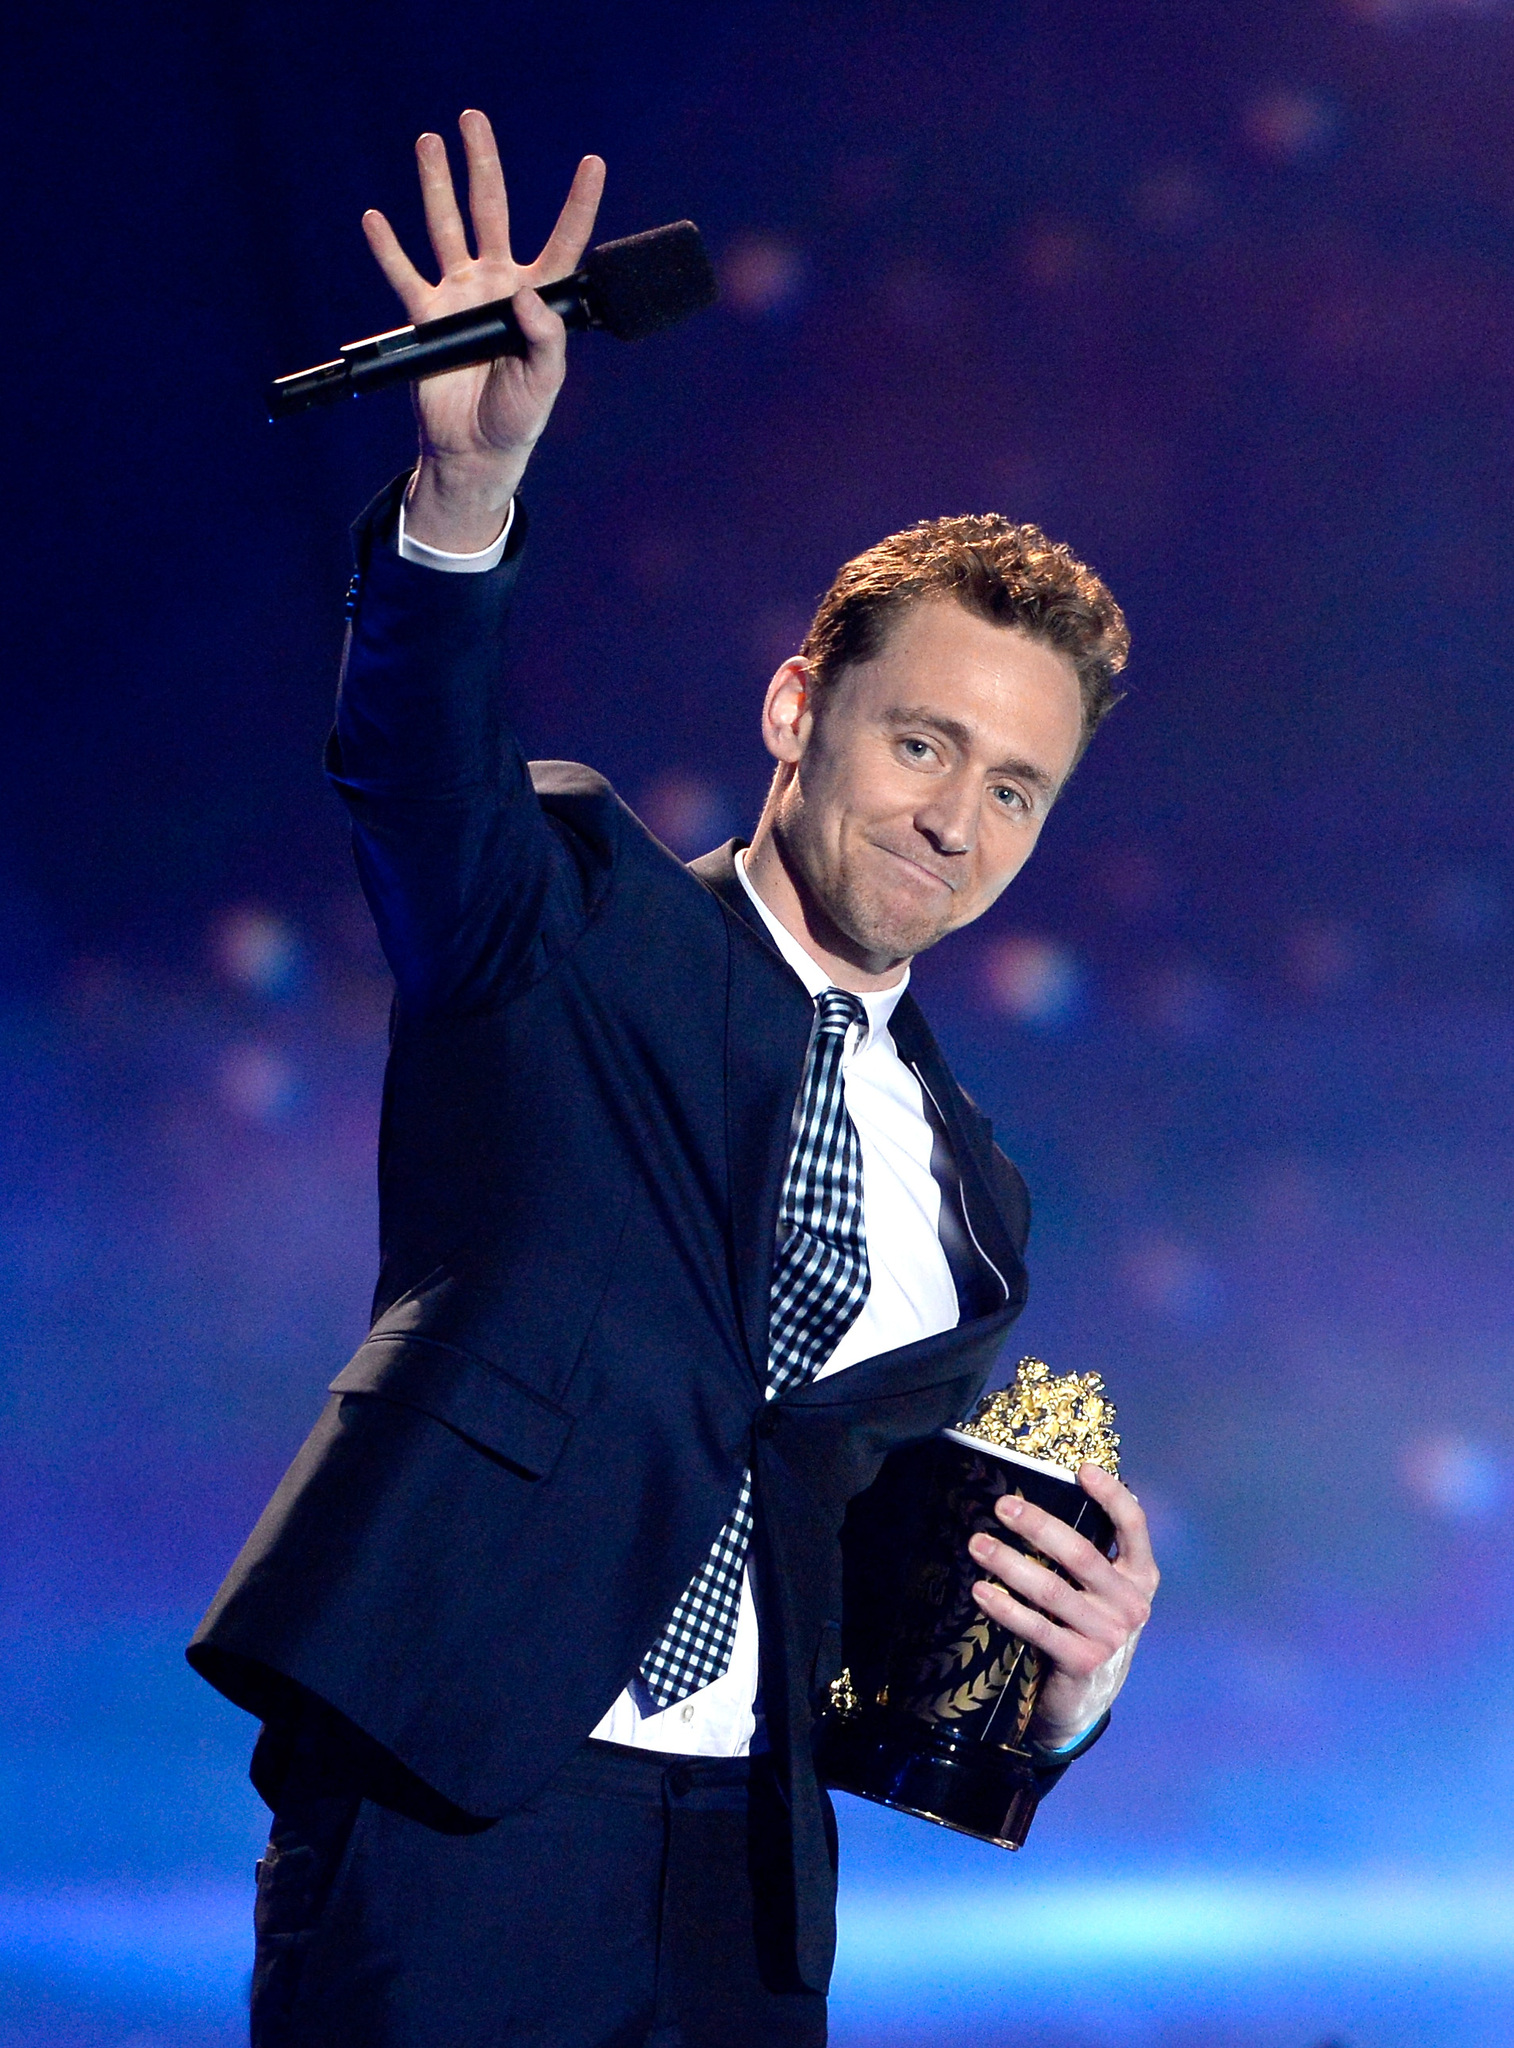 Tom Hiddleston at event of 2013 MTV Movie Awards (2013)